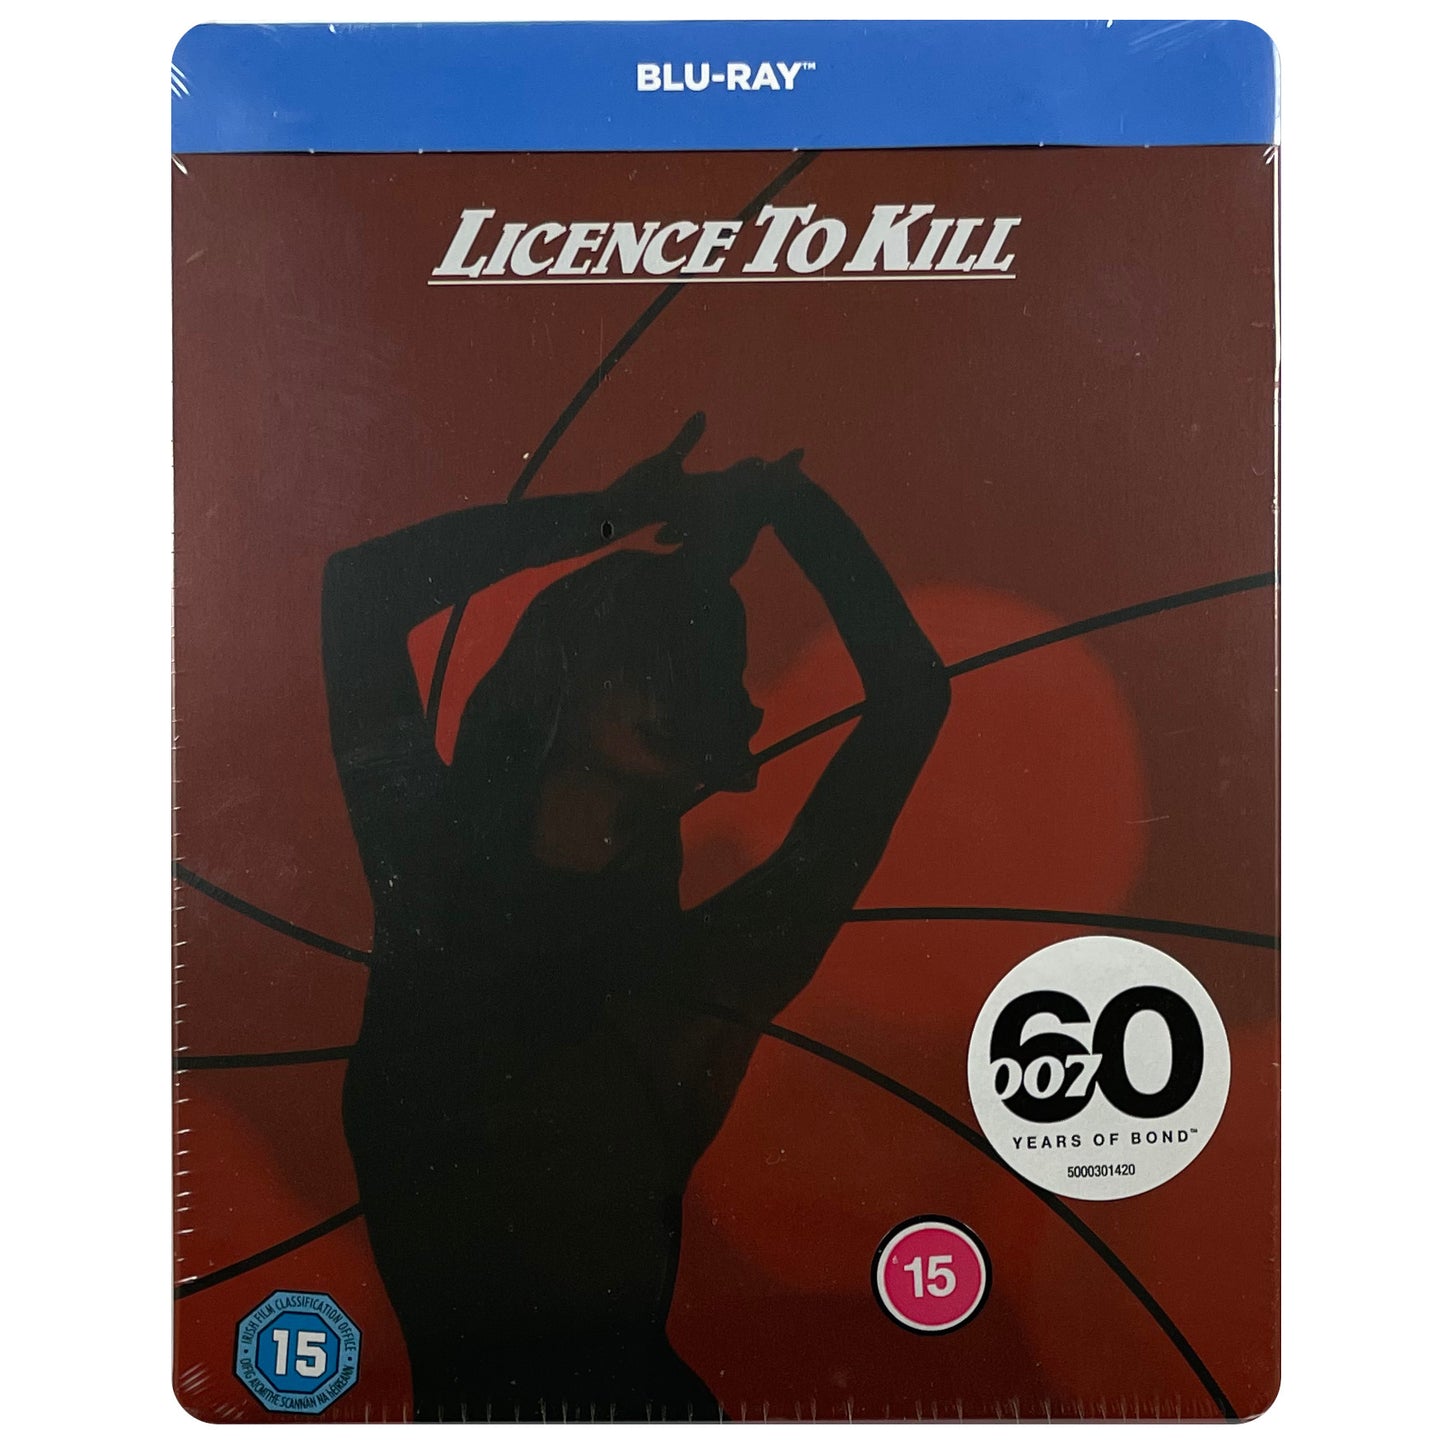 Licence to Kill Blu-Ray Steelbook